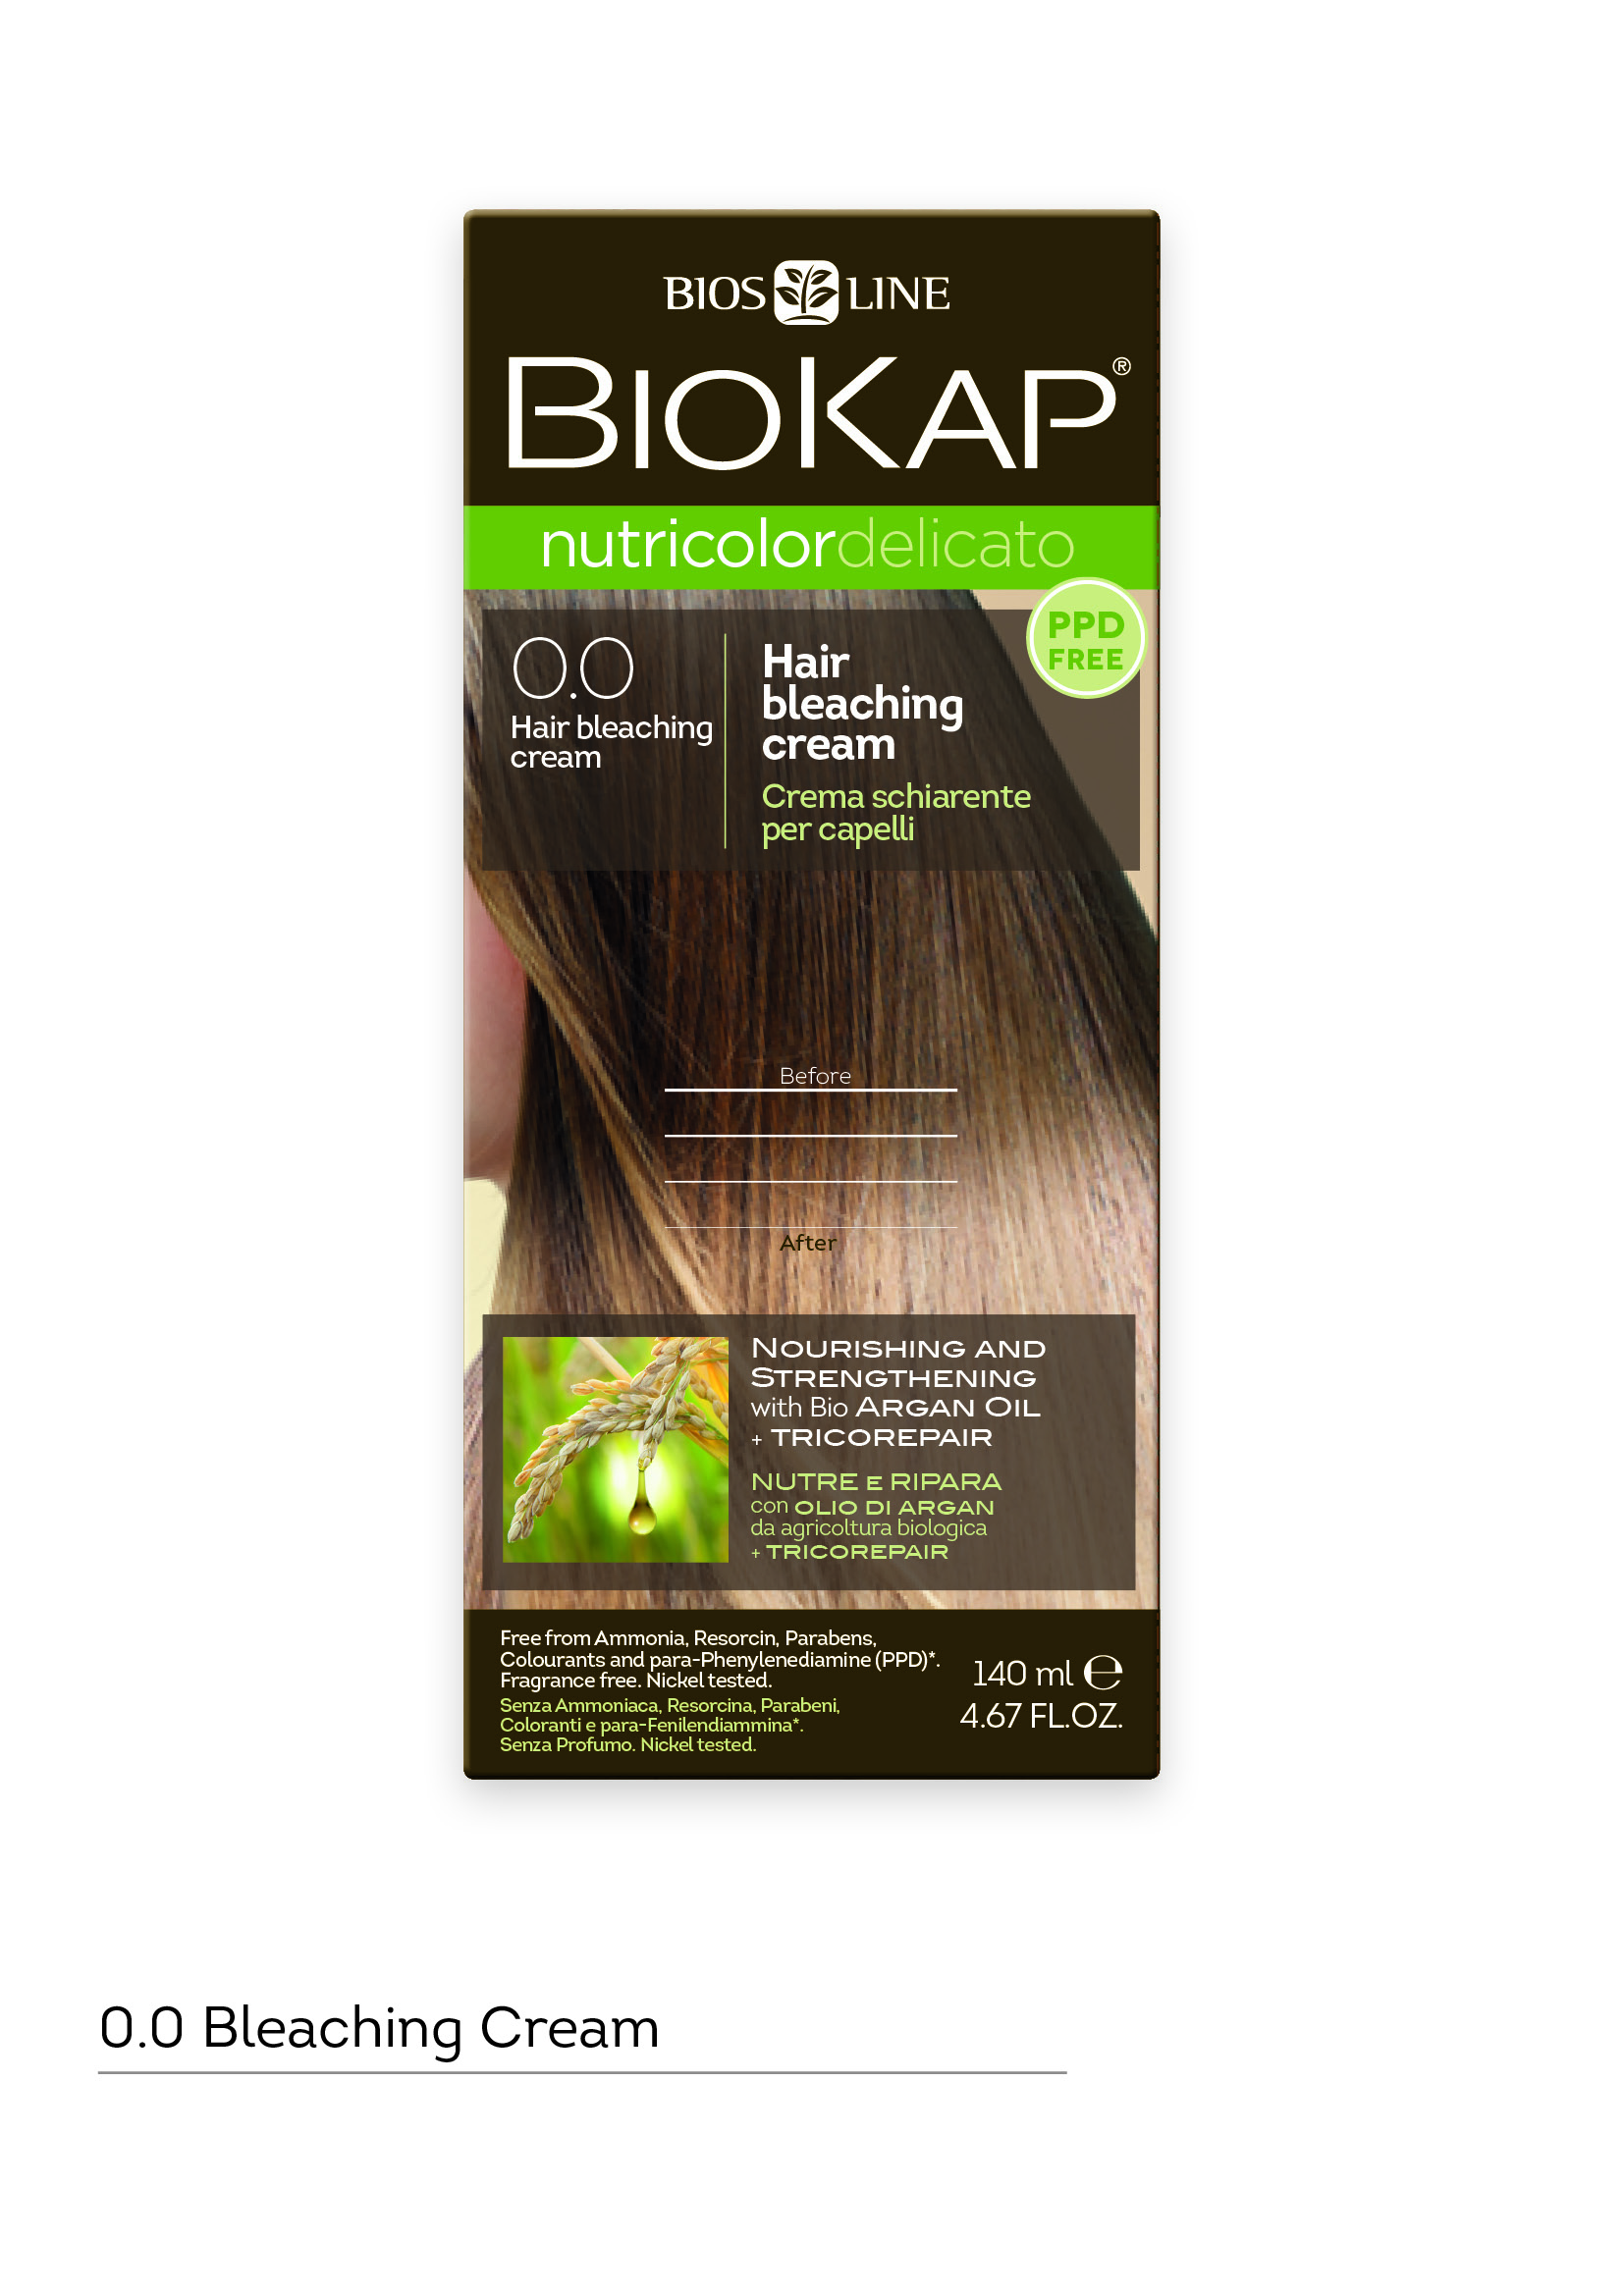 BioKap Nutricolor Delicato Hair Bleaching Cream 140ml - 0.0